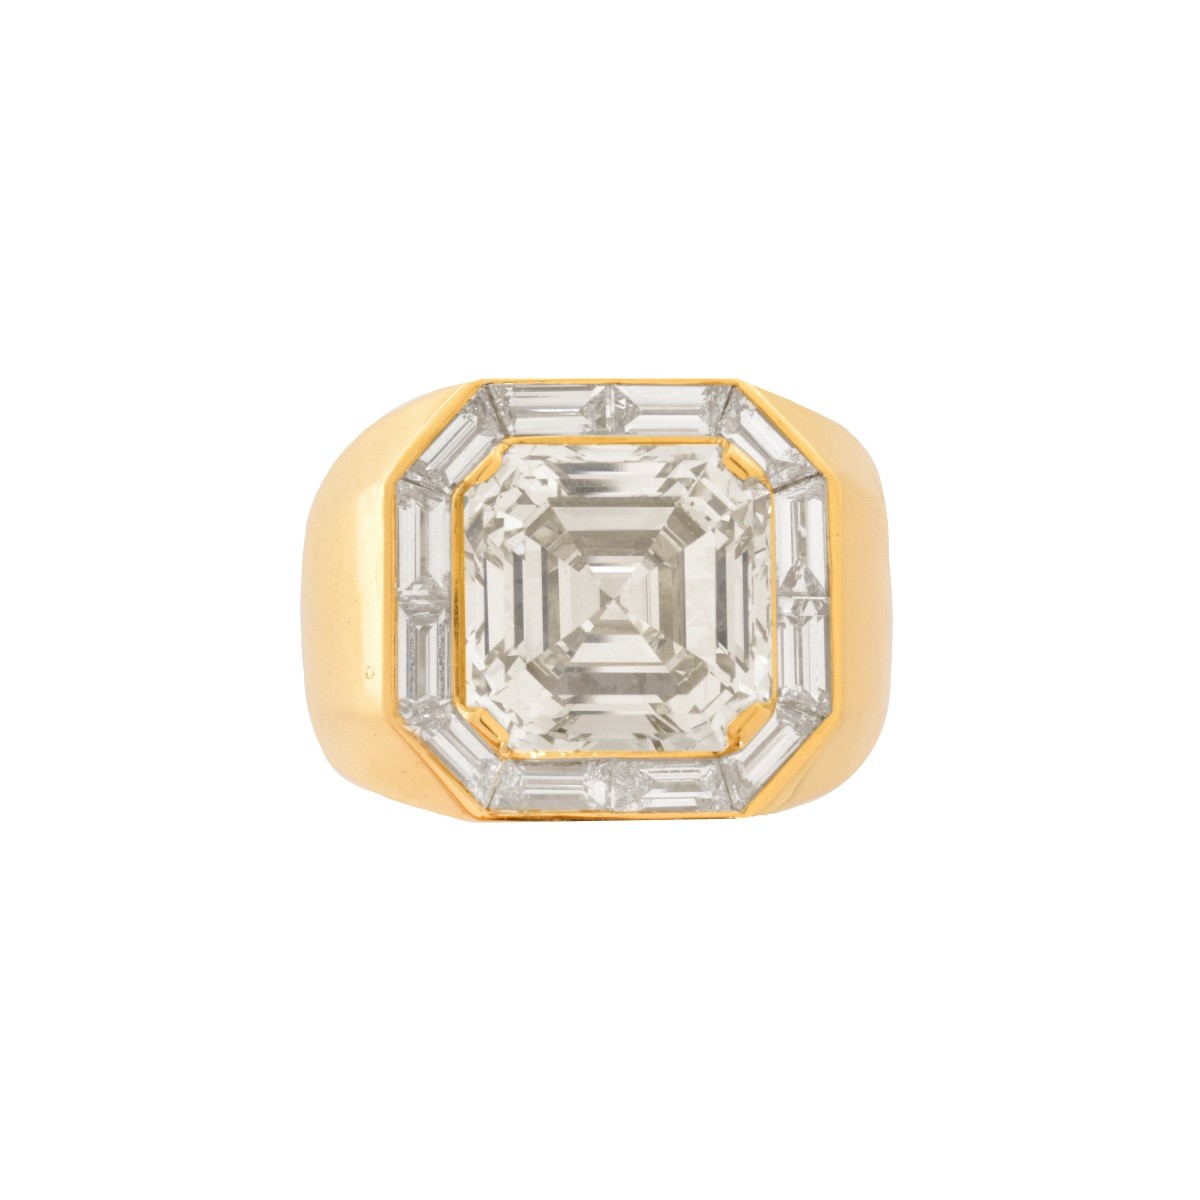 Man's 13.57 Carat Diamond and 18K Ring